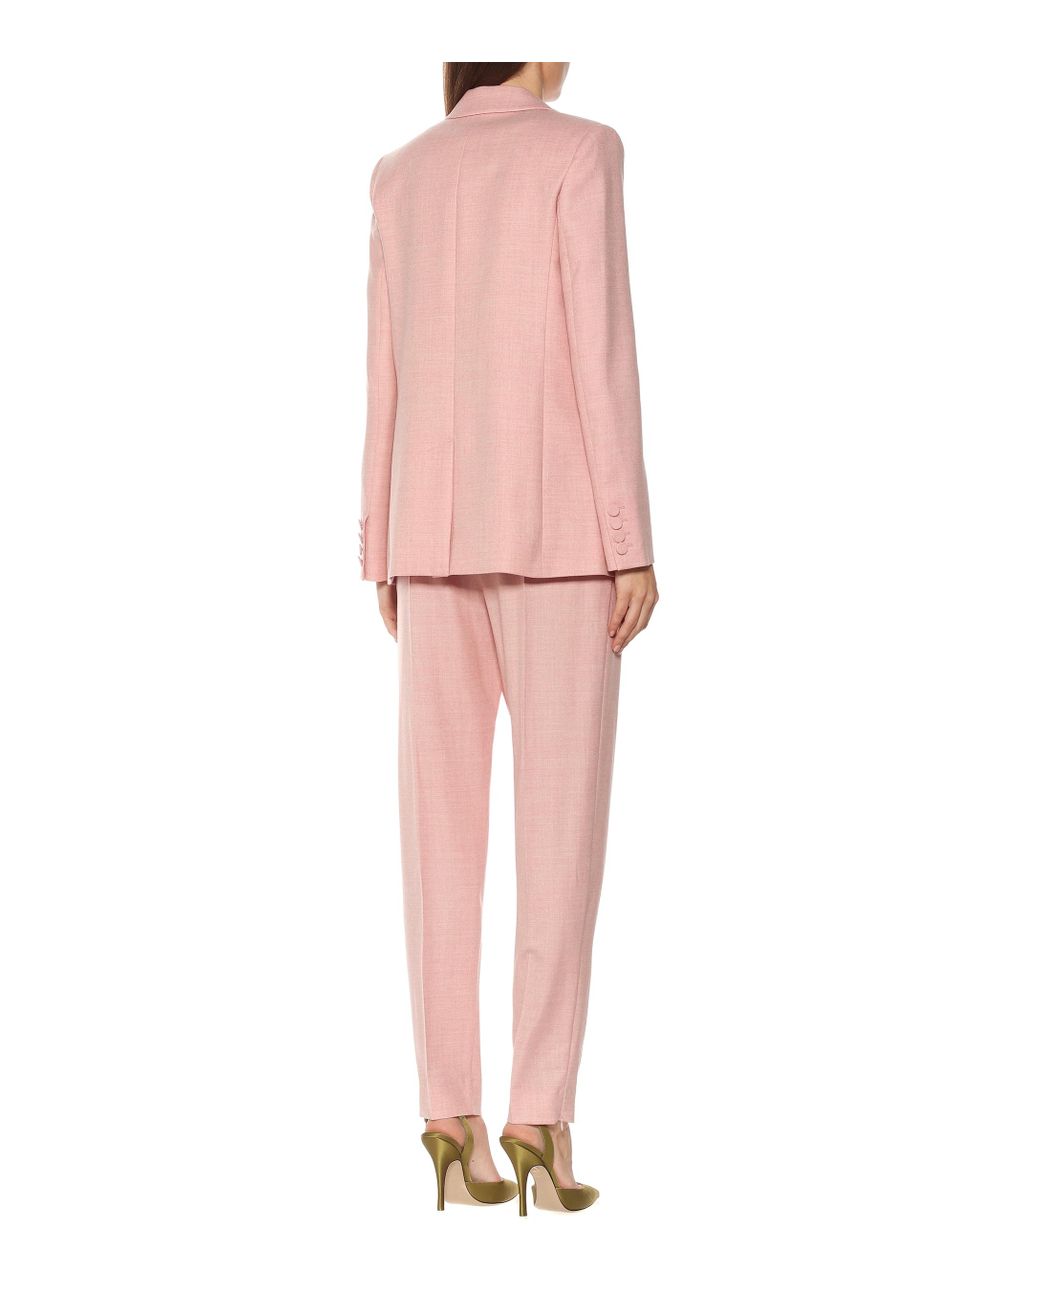 ROKSANDA Antalya Wool-flannel Blazer in Pink - Lyst